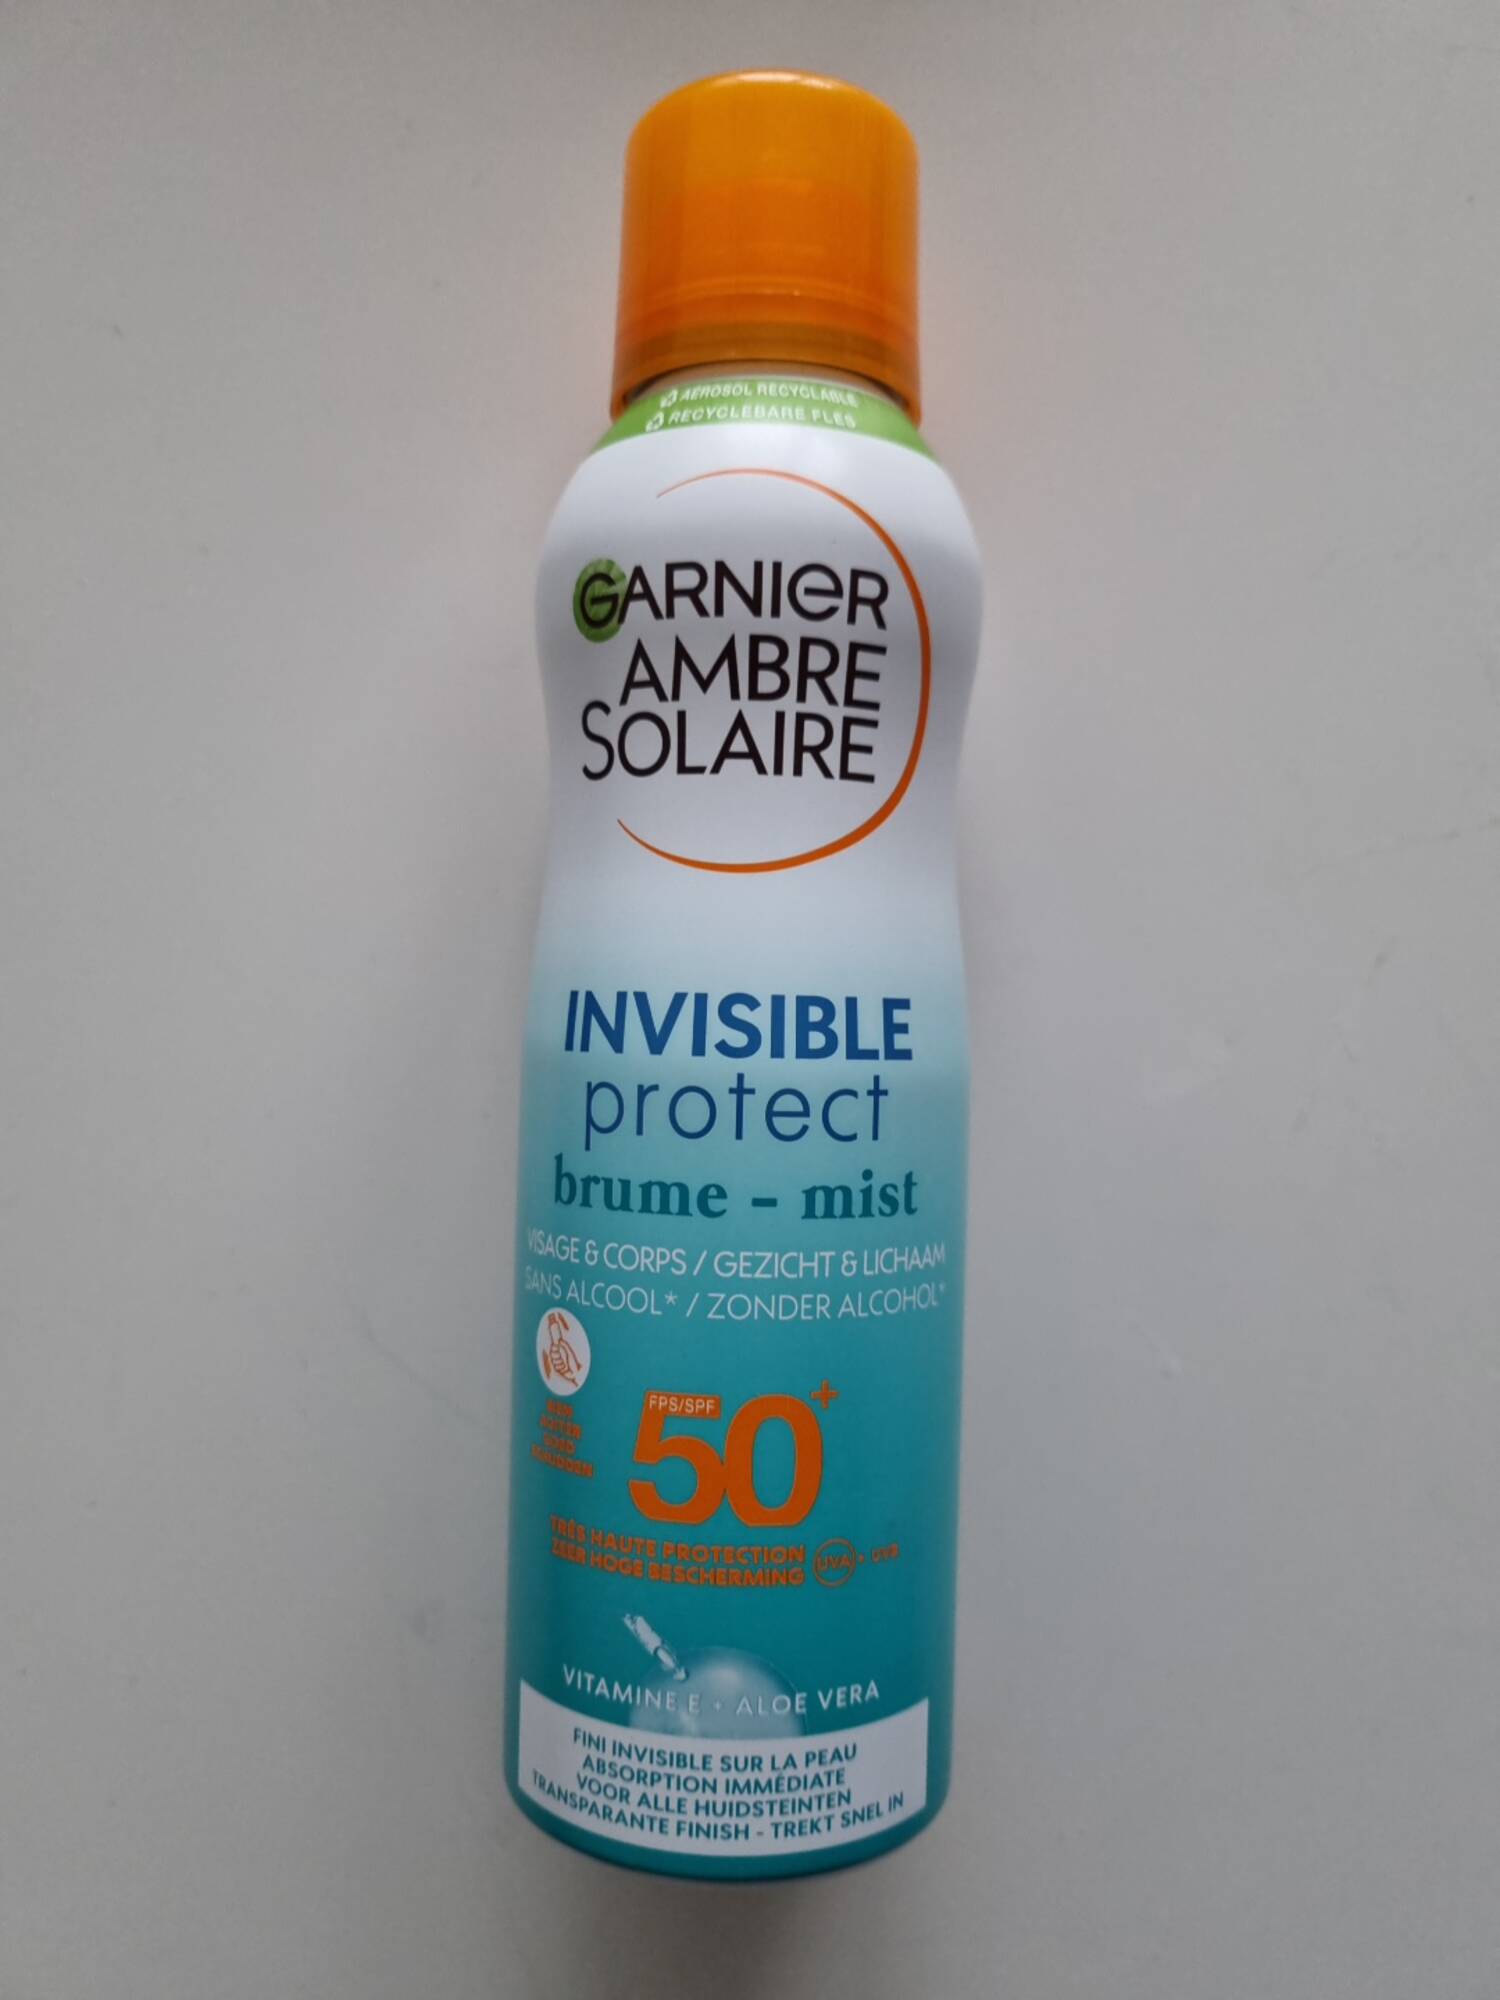 GARNIER - Ambre solaire Invisible protect brume visage & corps SPF 50+